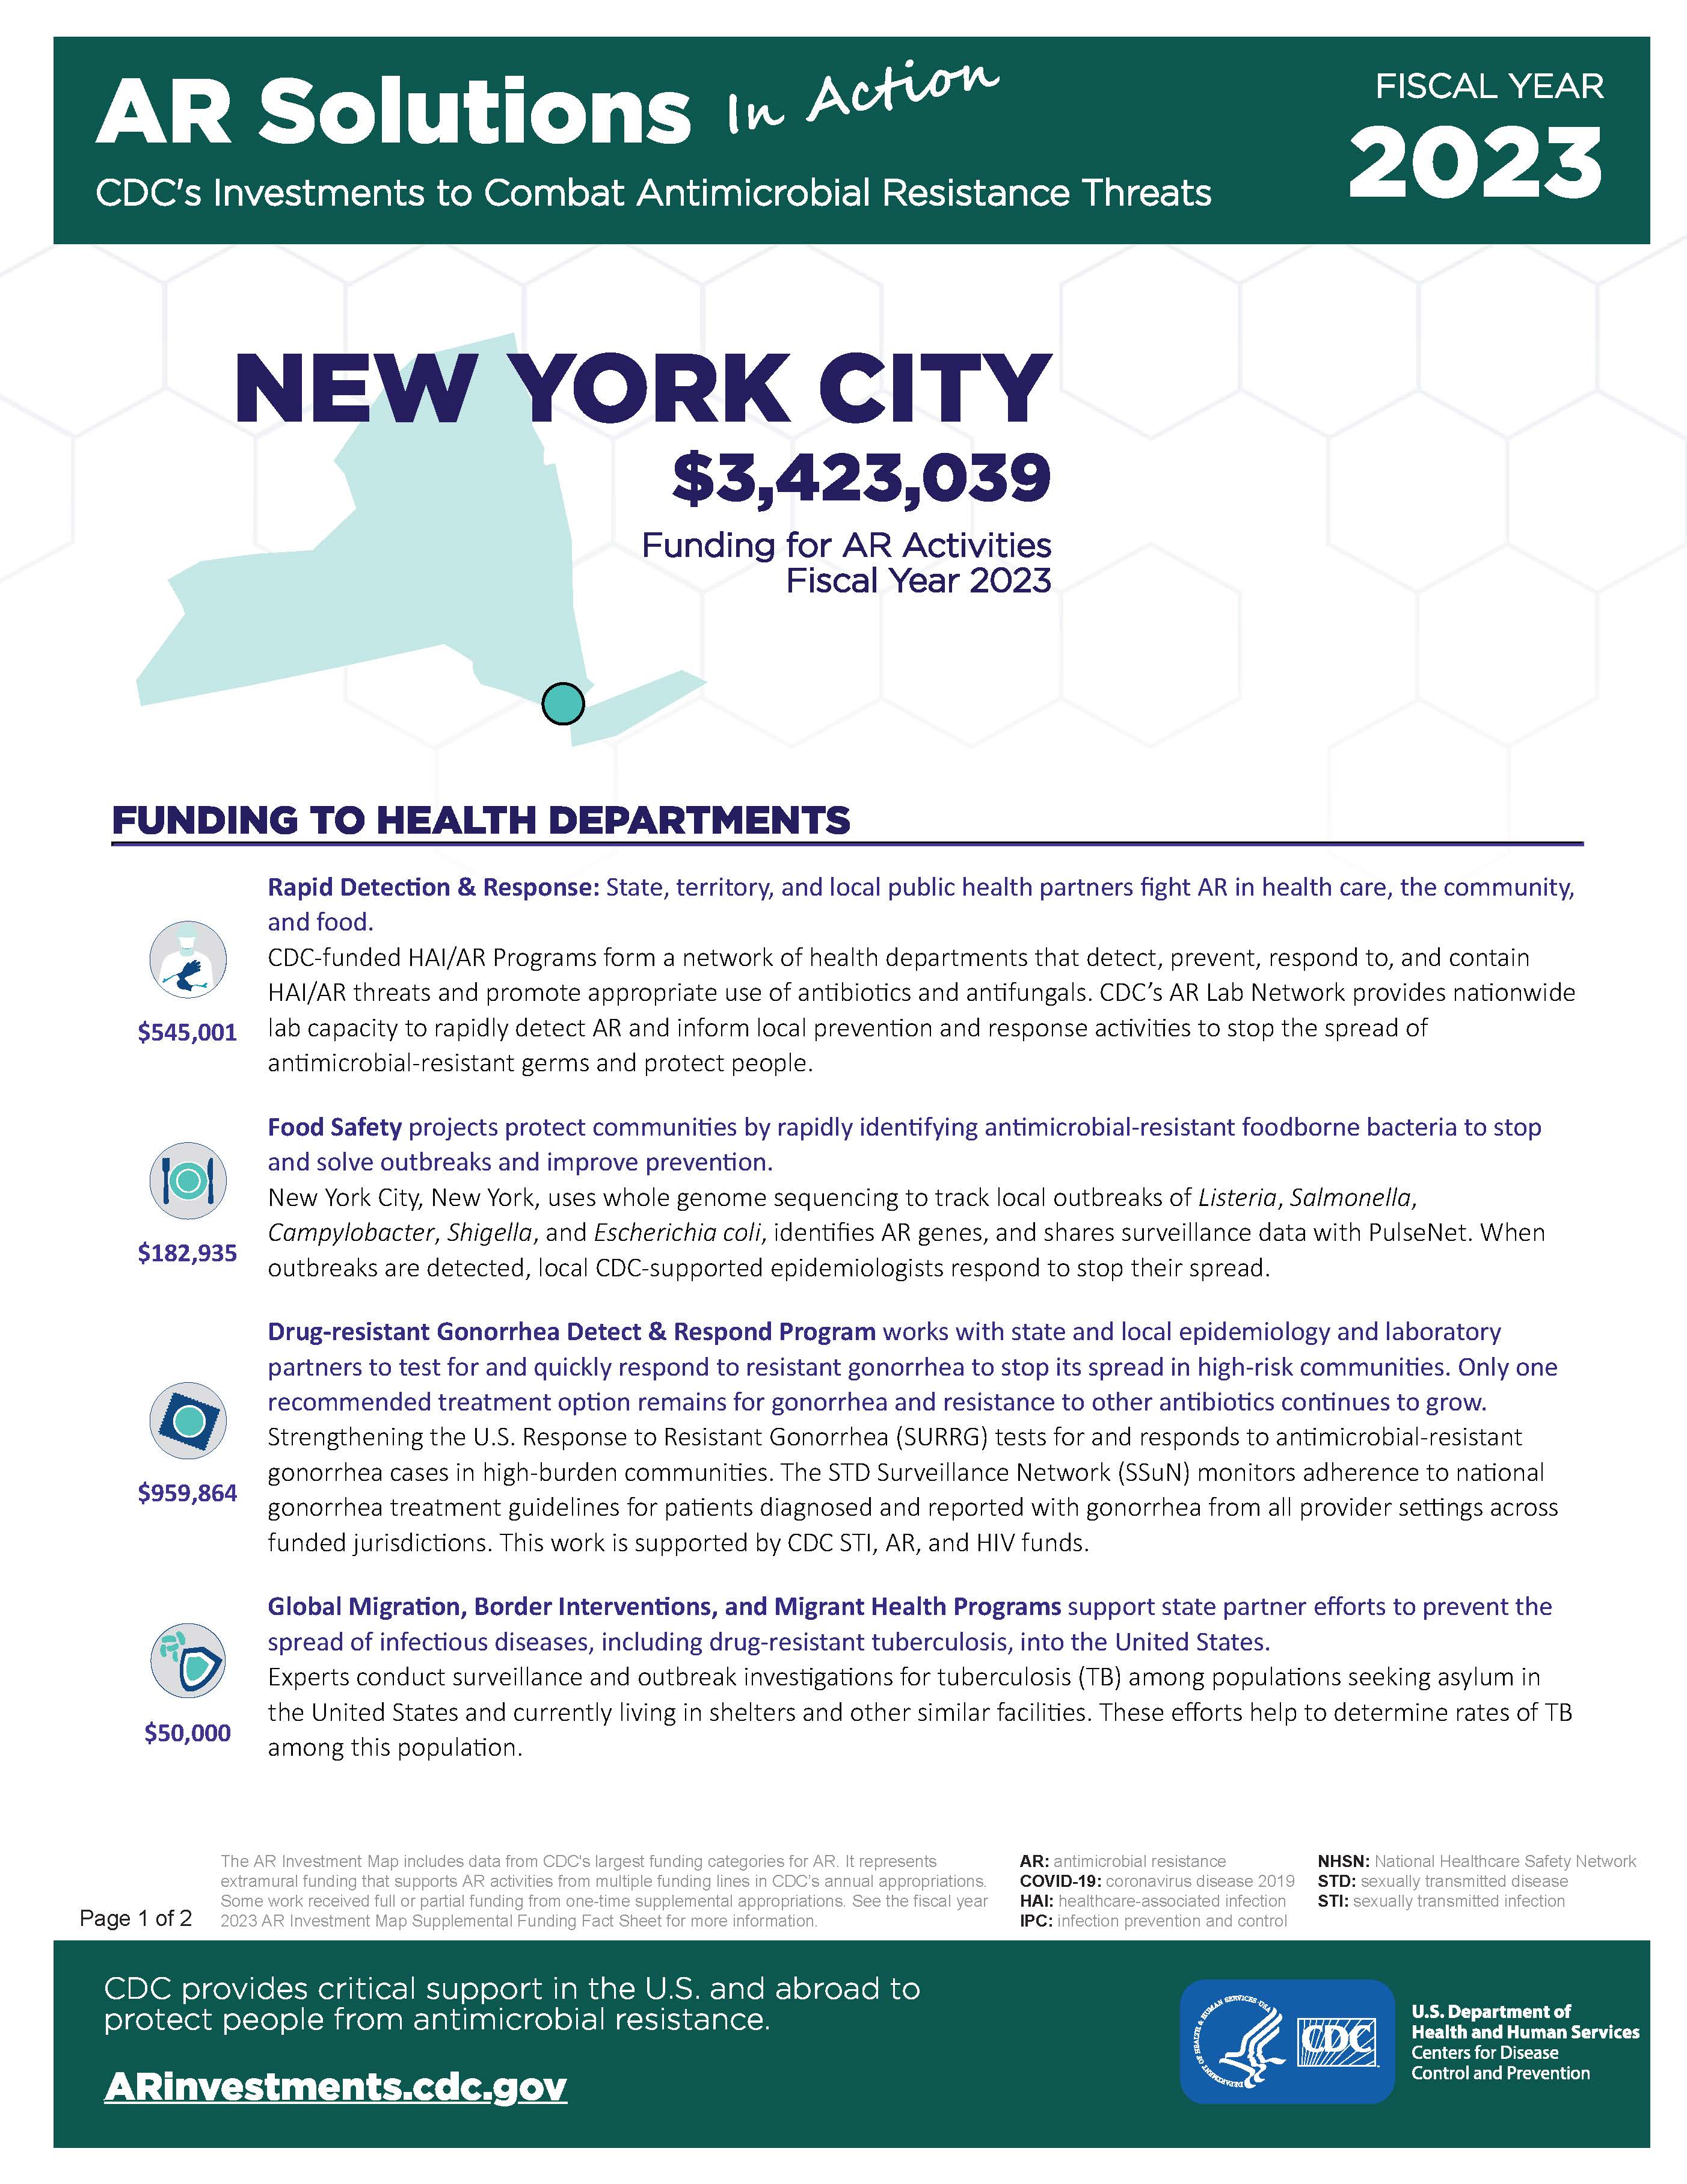 View Factsheet for New York City, NY